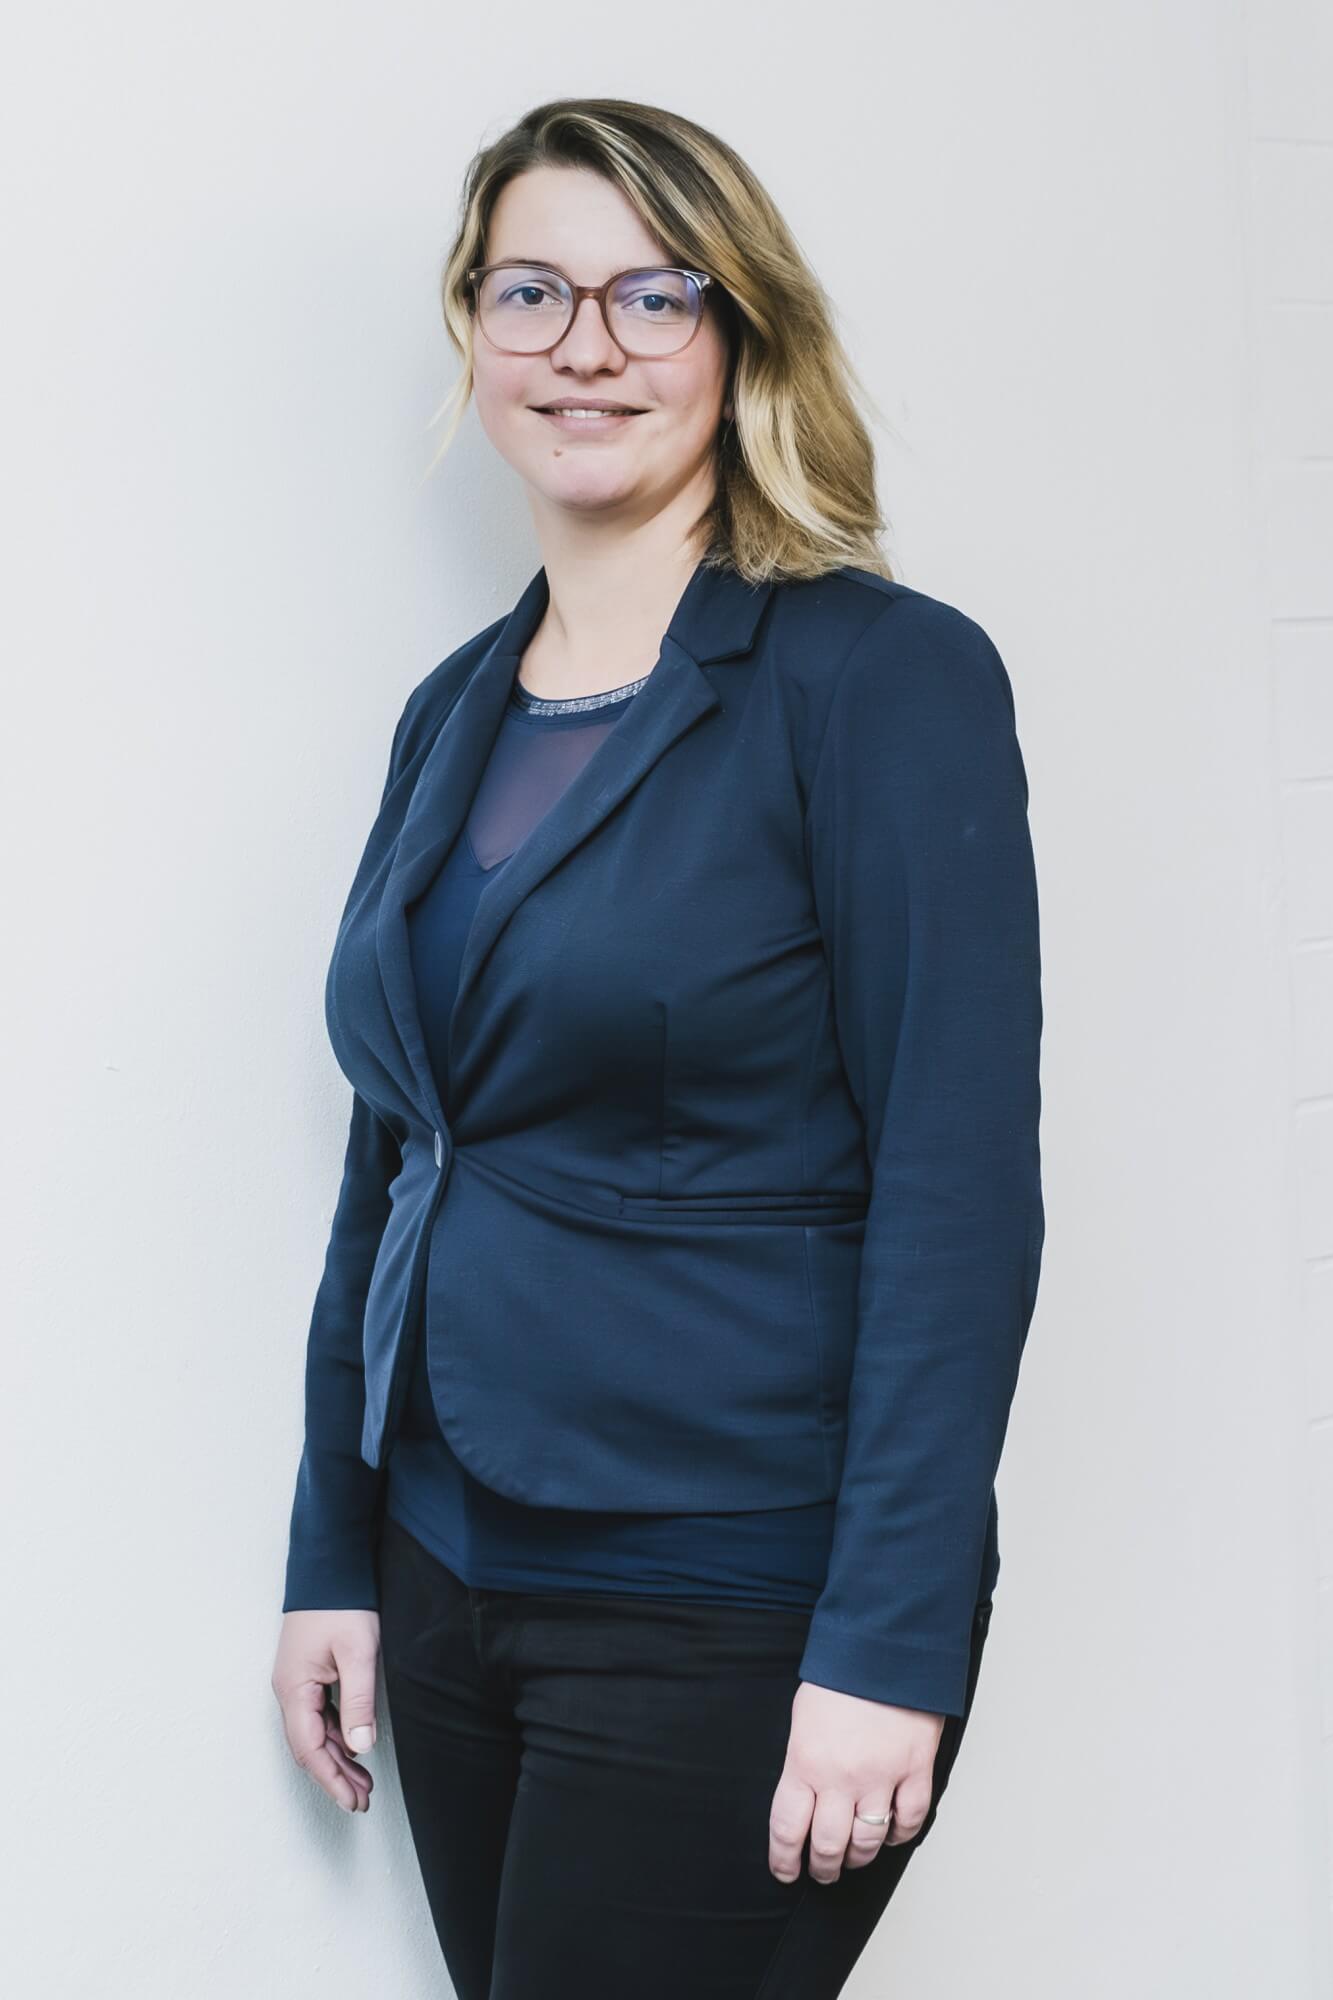 Jana Gründig